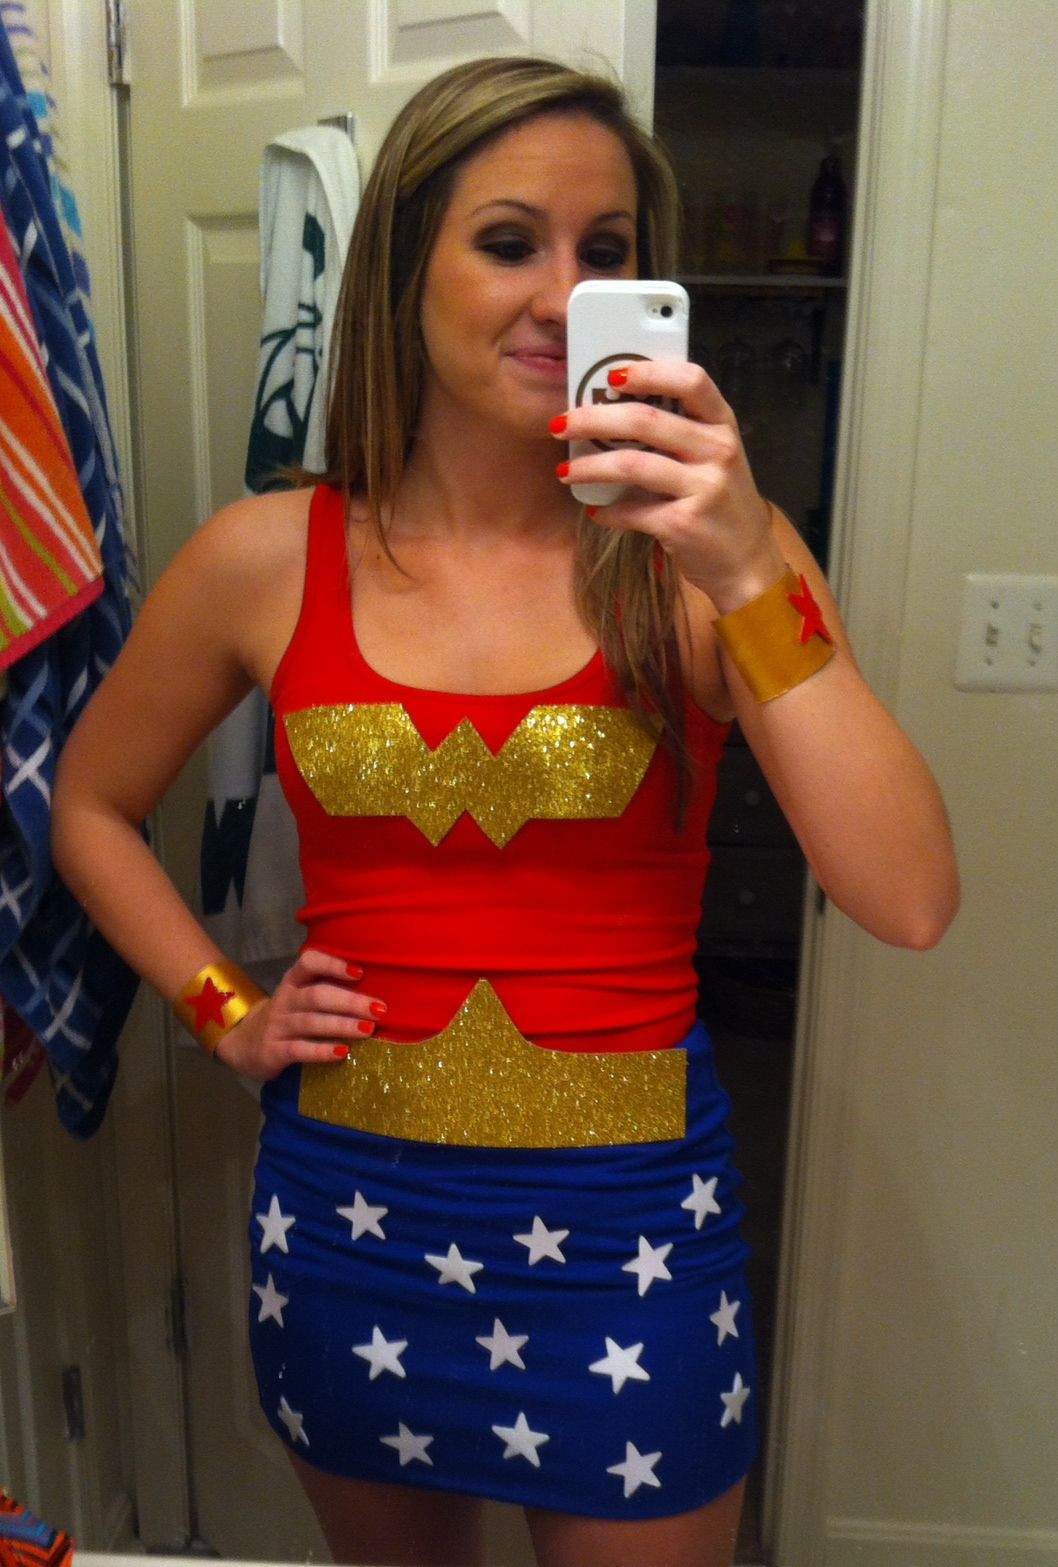 Best ideas about Wonder Woman Halloween Costume DIY
. Save or Pin DIY Wonder Woman costume Halloweiner Pinterest Now.